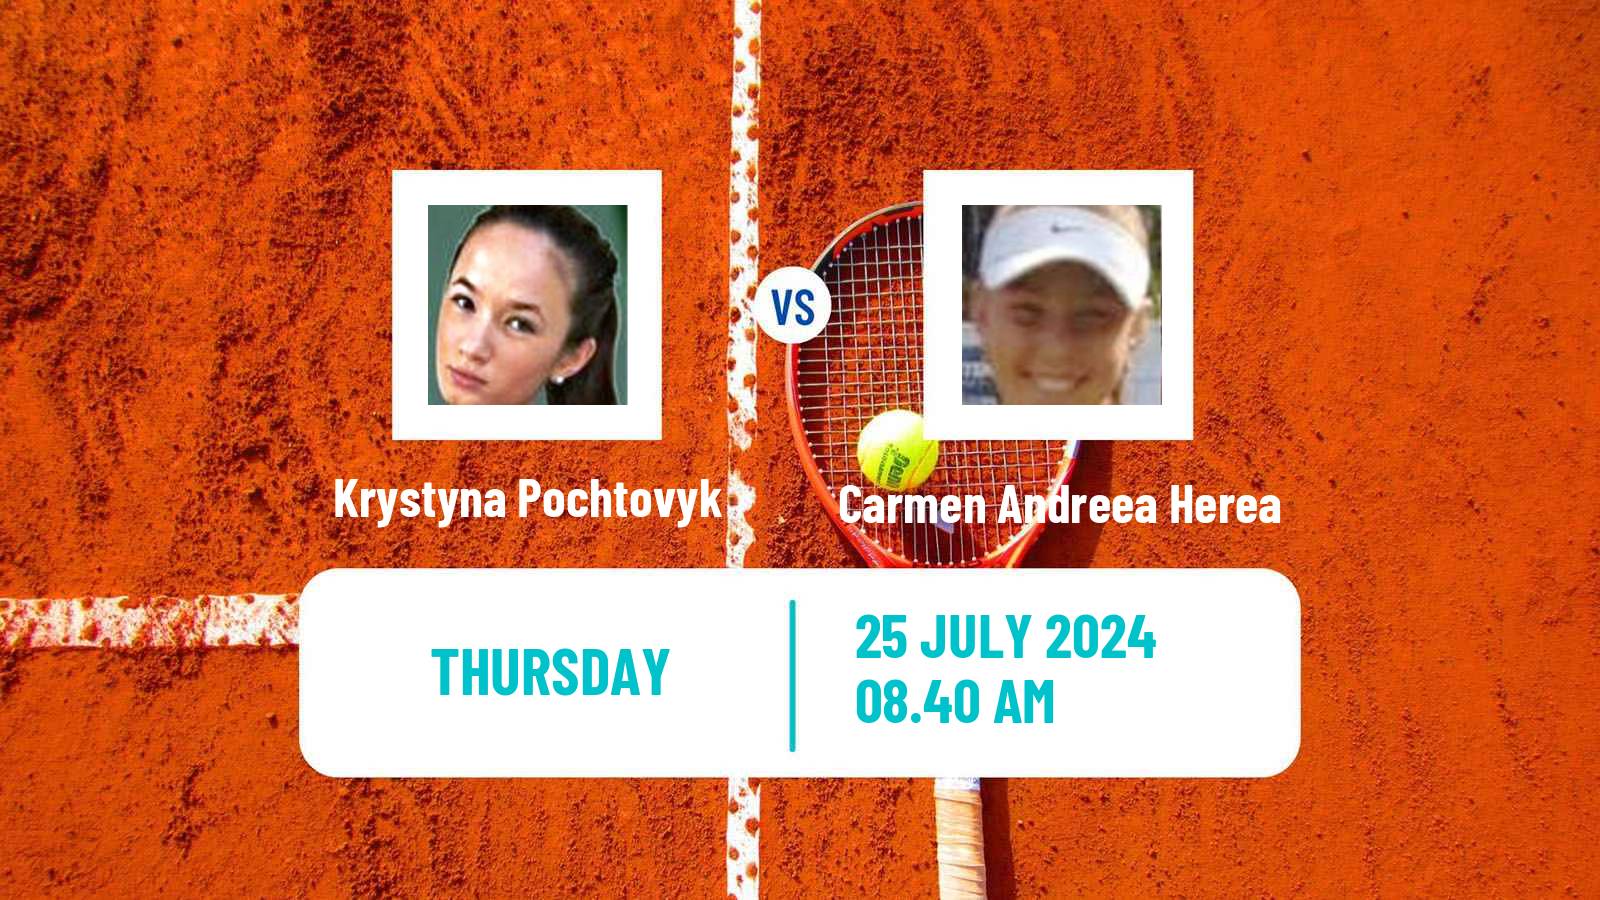 Tennis ITF W15 Satu Mare Women Krystyna Pochtovyk - Carmen Andreea Herea